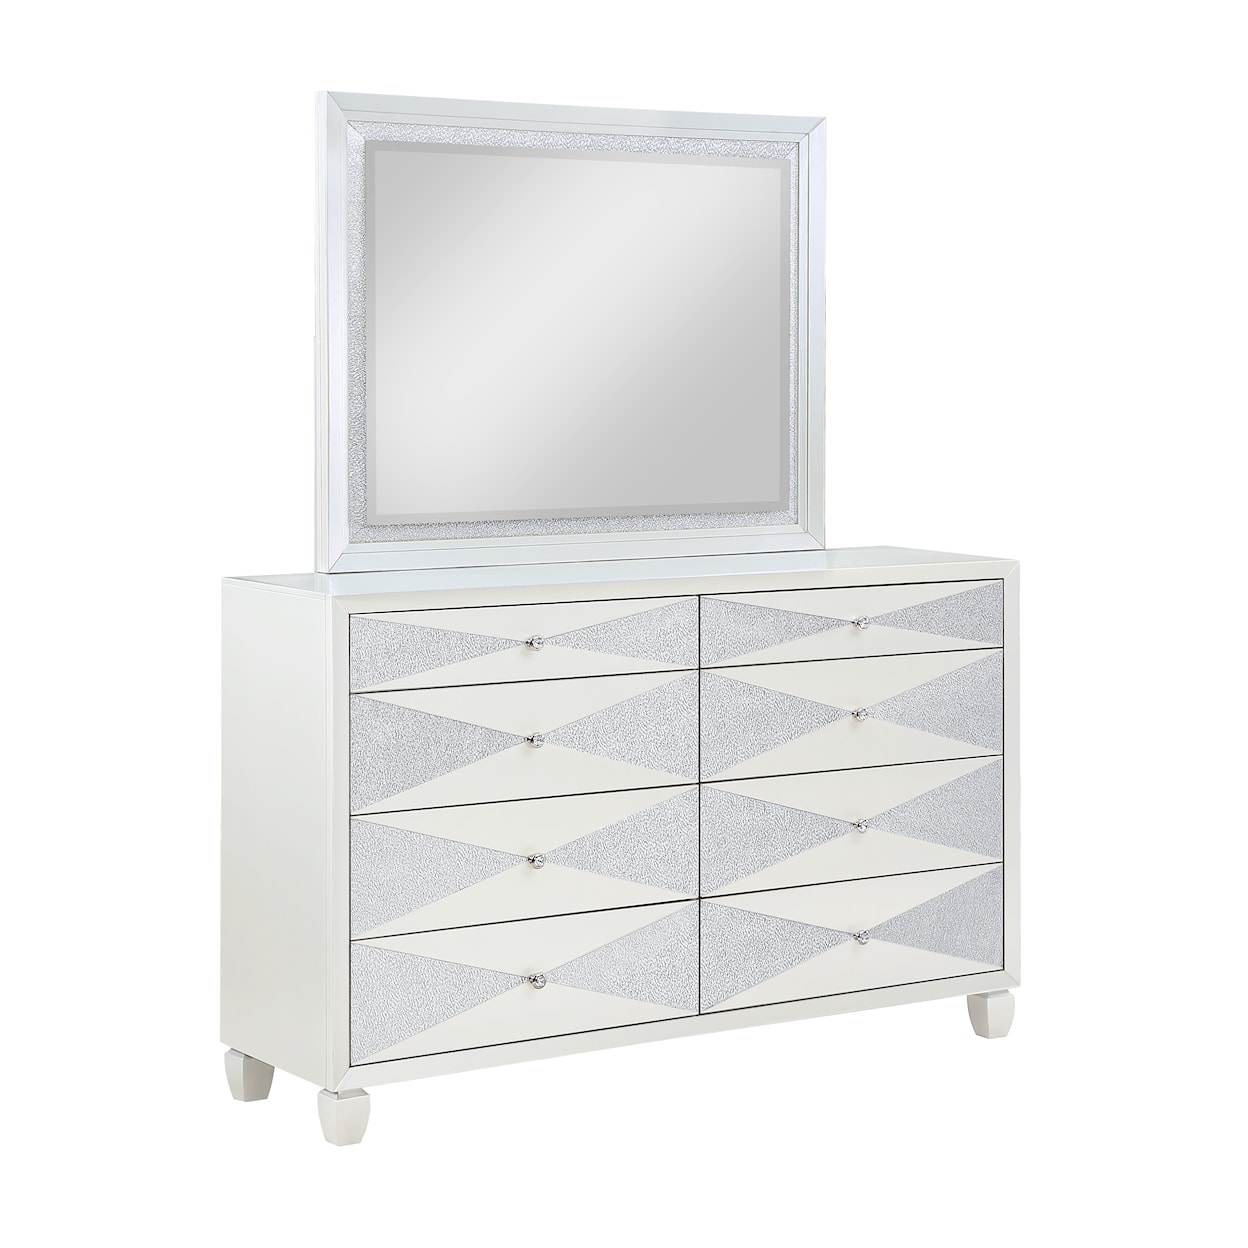 New Classic Furniture Harlequin Dresser and Mirror Set